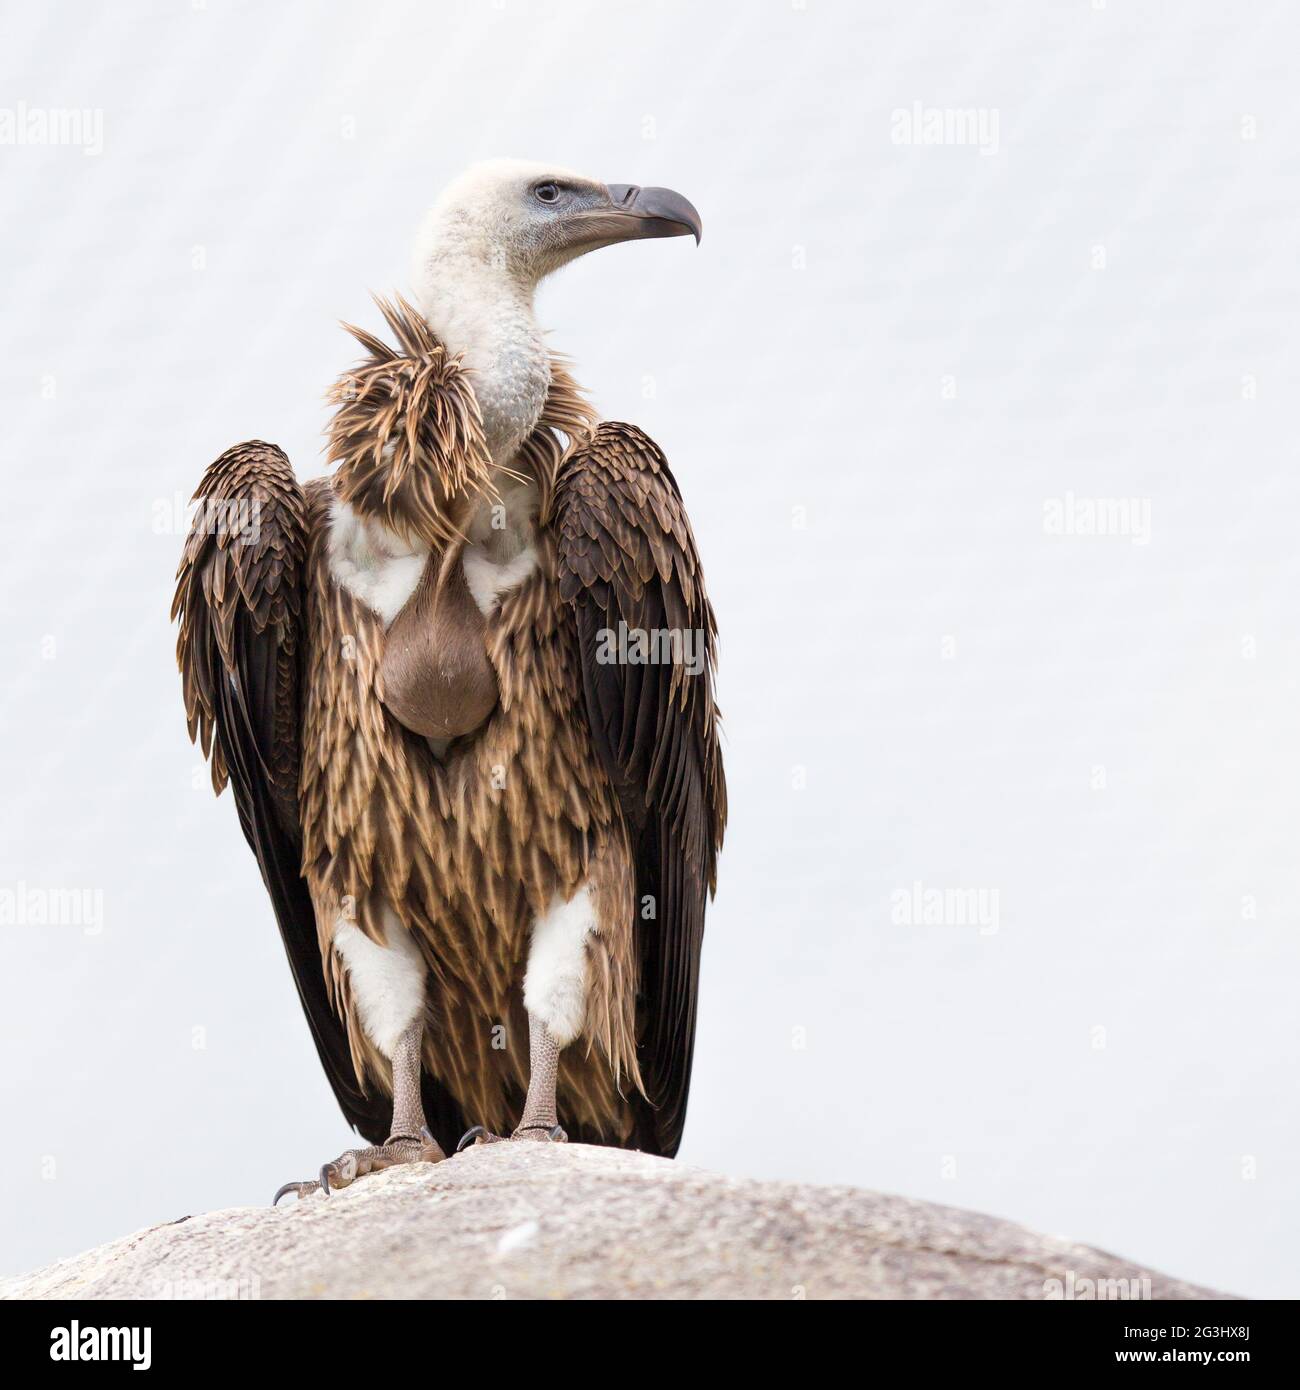 Adult condor Stock Photo